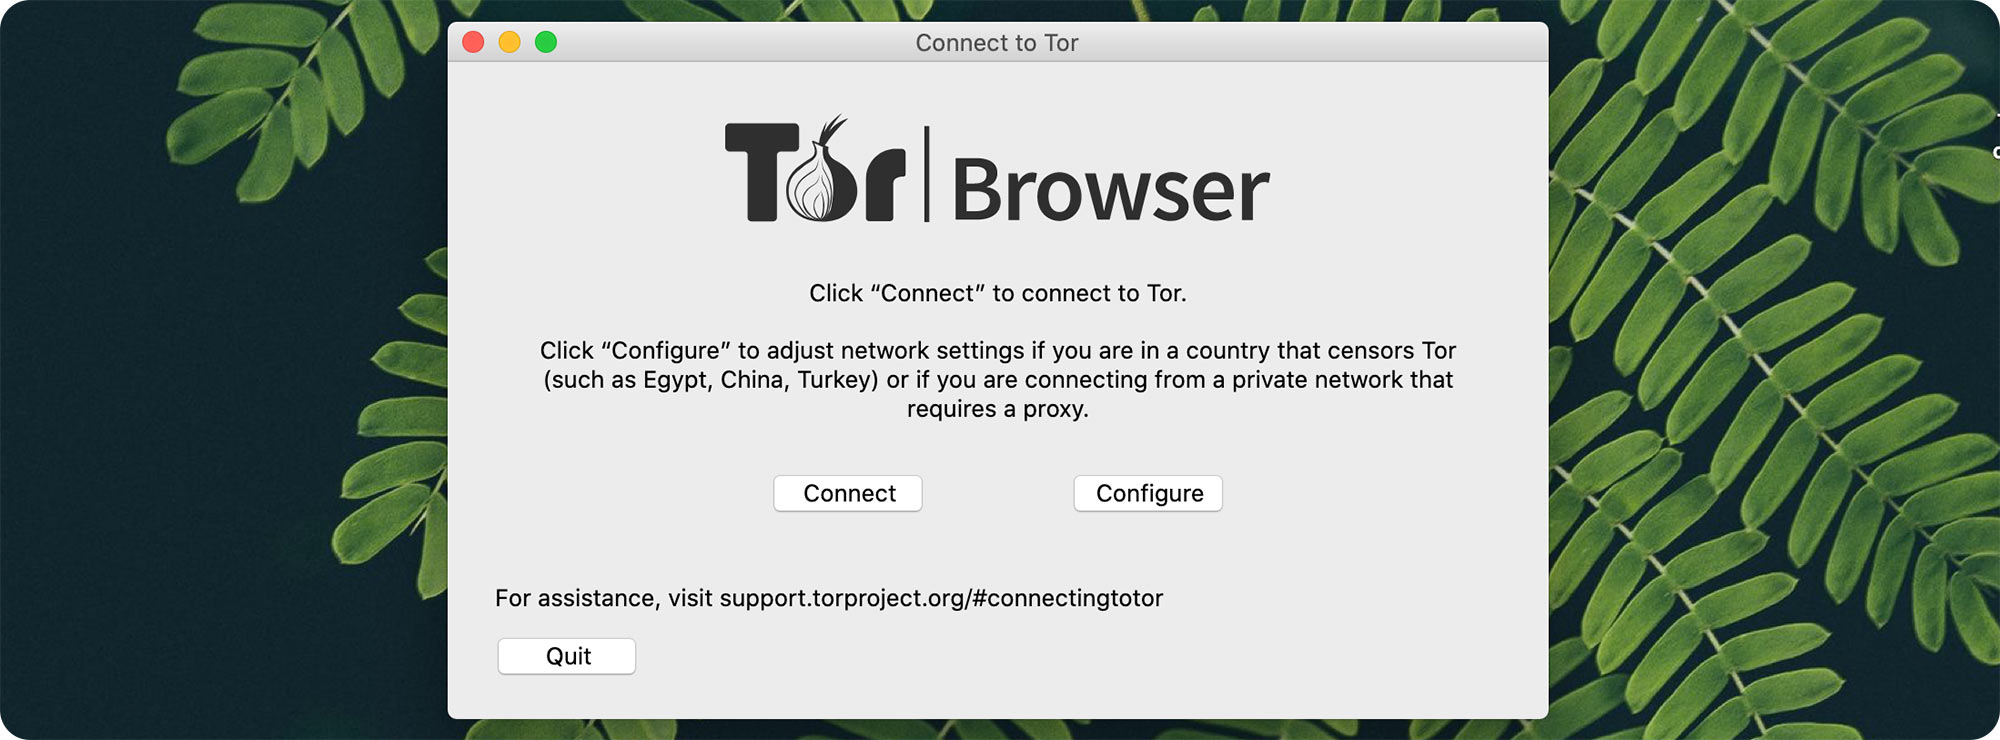 Tor browser on mac вход на гидру цвет марихуаны наркотики